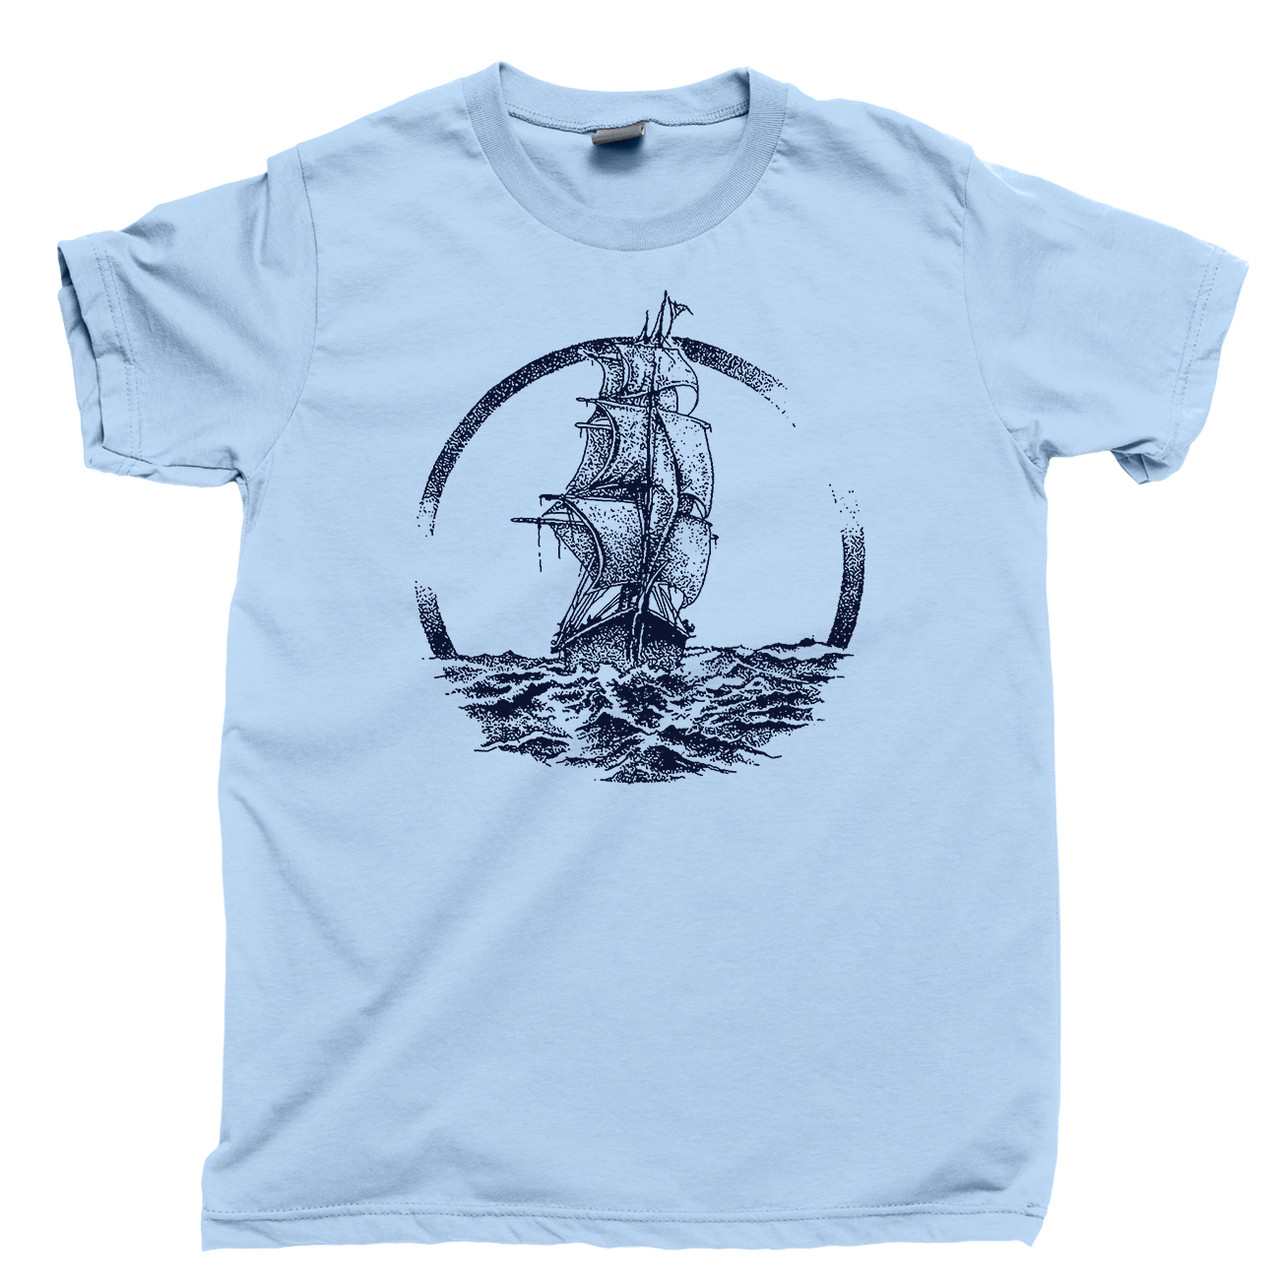 Ship Sailing The Ocean Seas T Shirt - Pirate Ship, Boat Captain, Sailors,  Nautical Sailing Tee